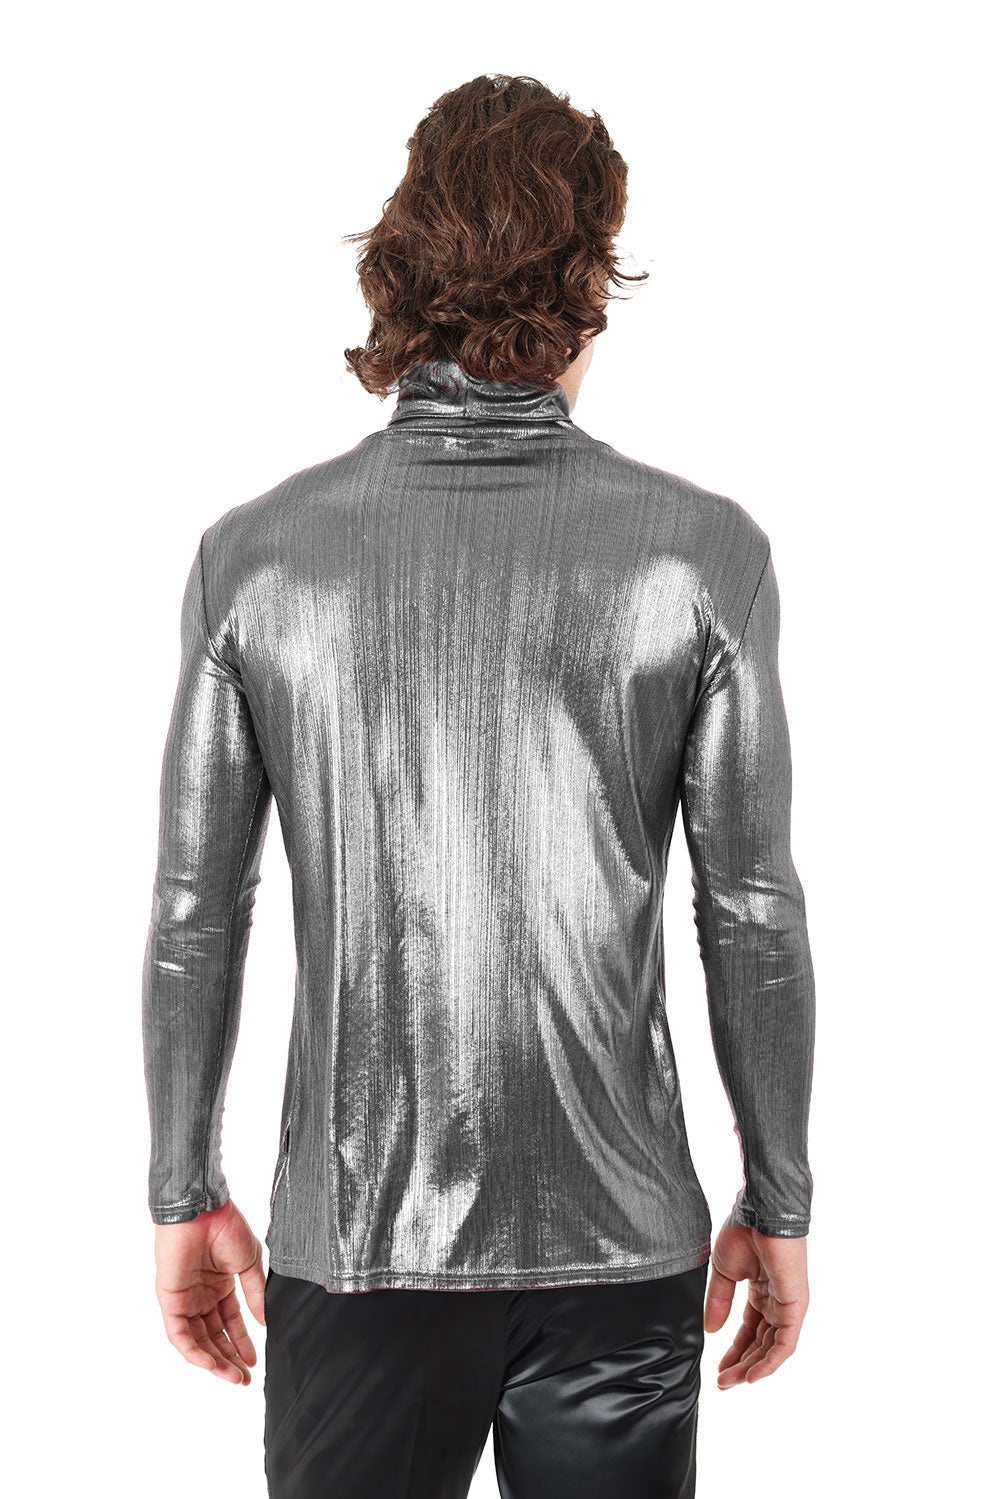 Barabas Men's Metallic Shiny Long Sleeve Turtleneck Sweater 2KT1000 Silver